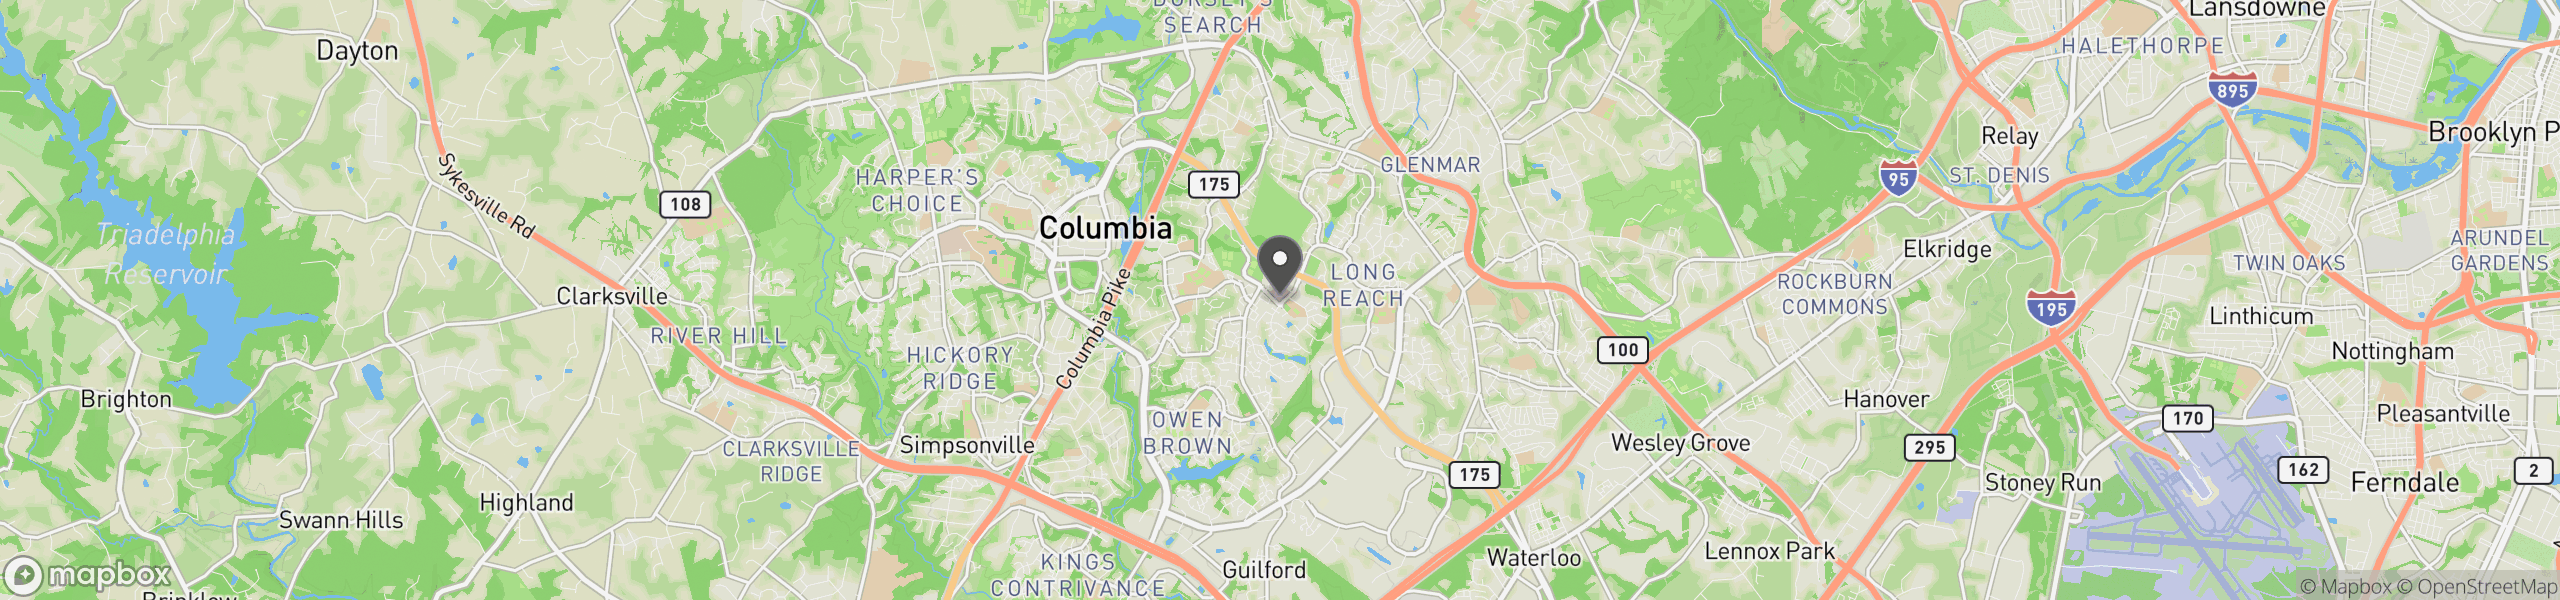 Columbia, MD